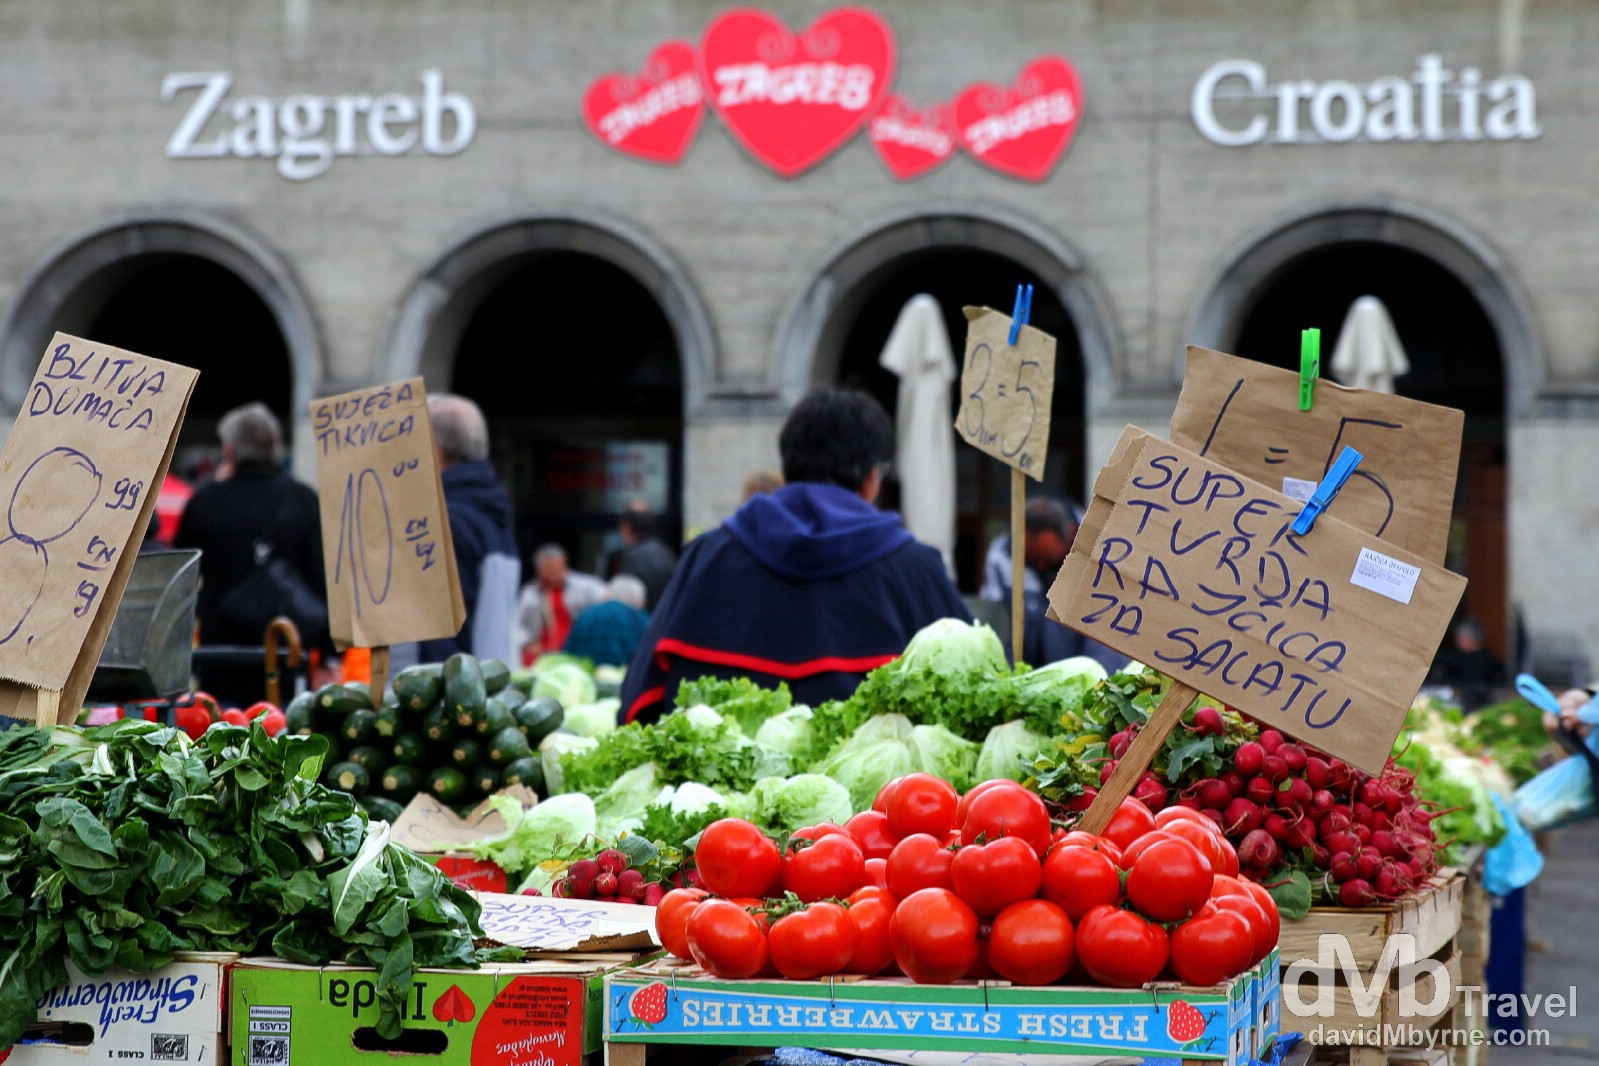 Dolac Fruit & Vegetable Market, Zagreb, Croatia. March 24th, 2014.